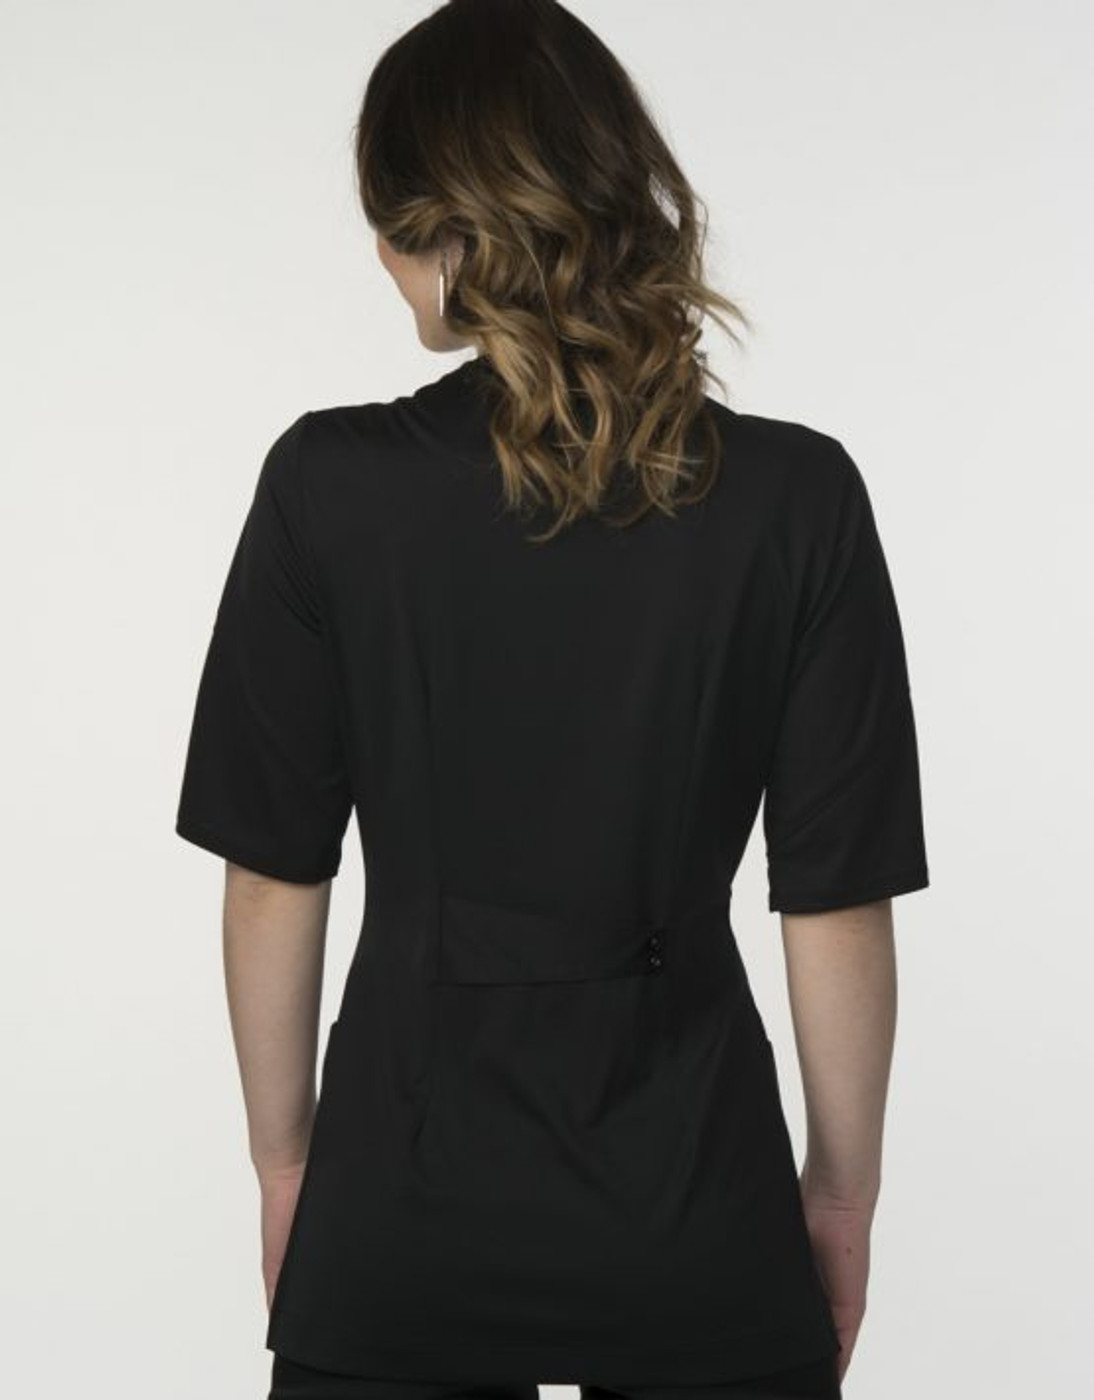 Carolyn Design Cute 3/4 sleeves nursing Scrub Top with Two way zipper in Black